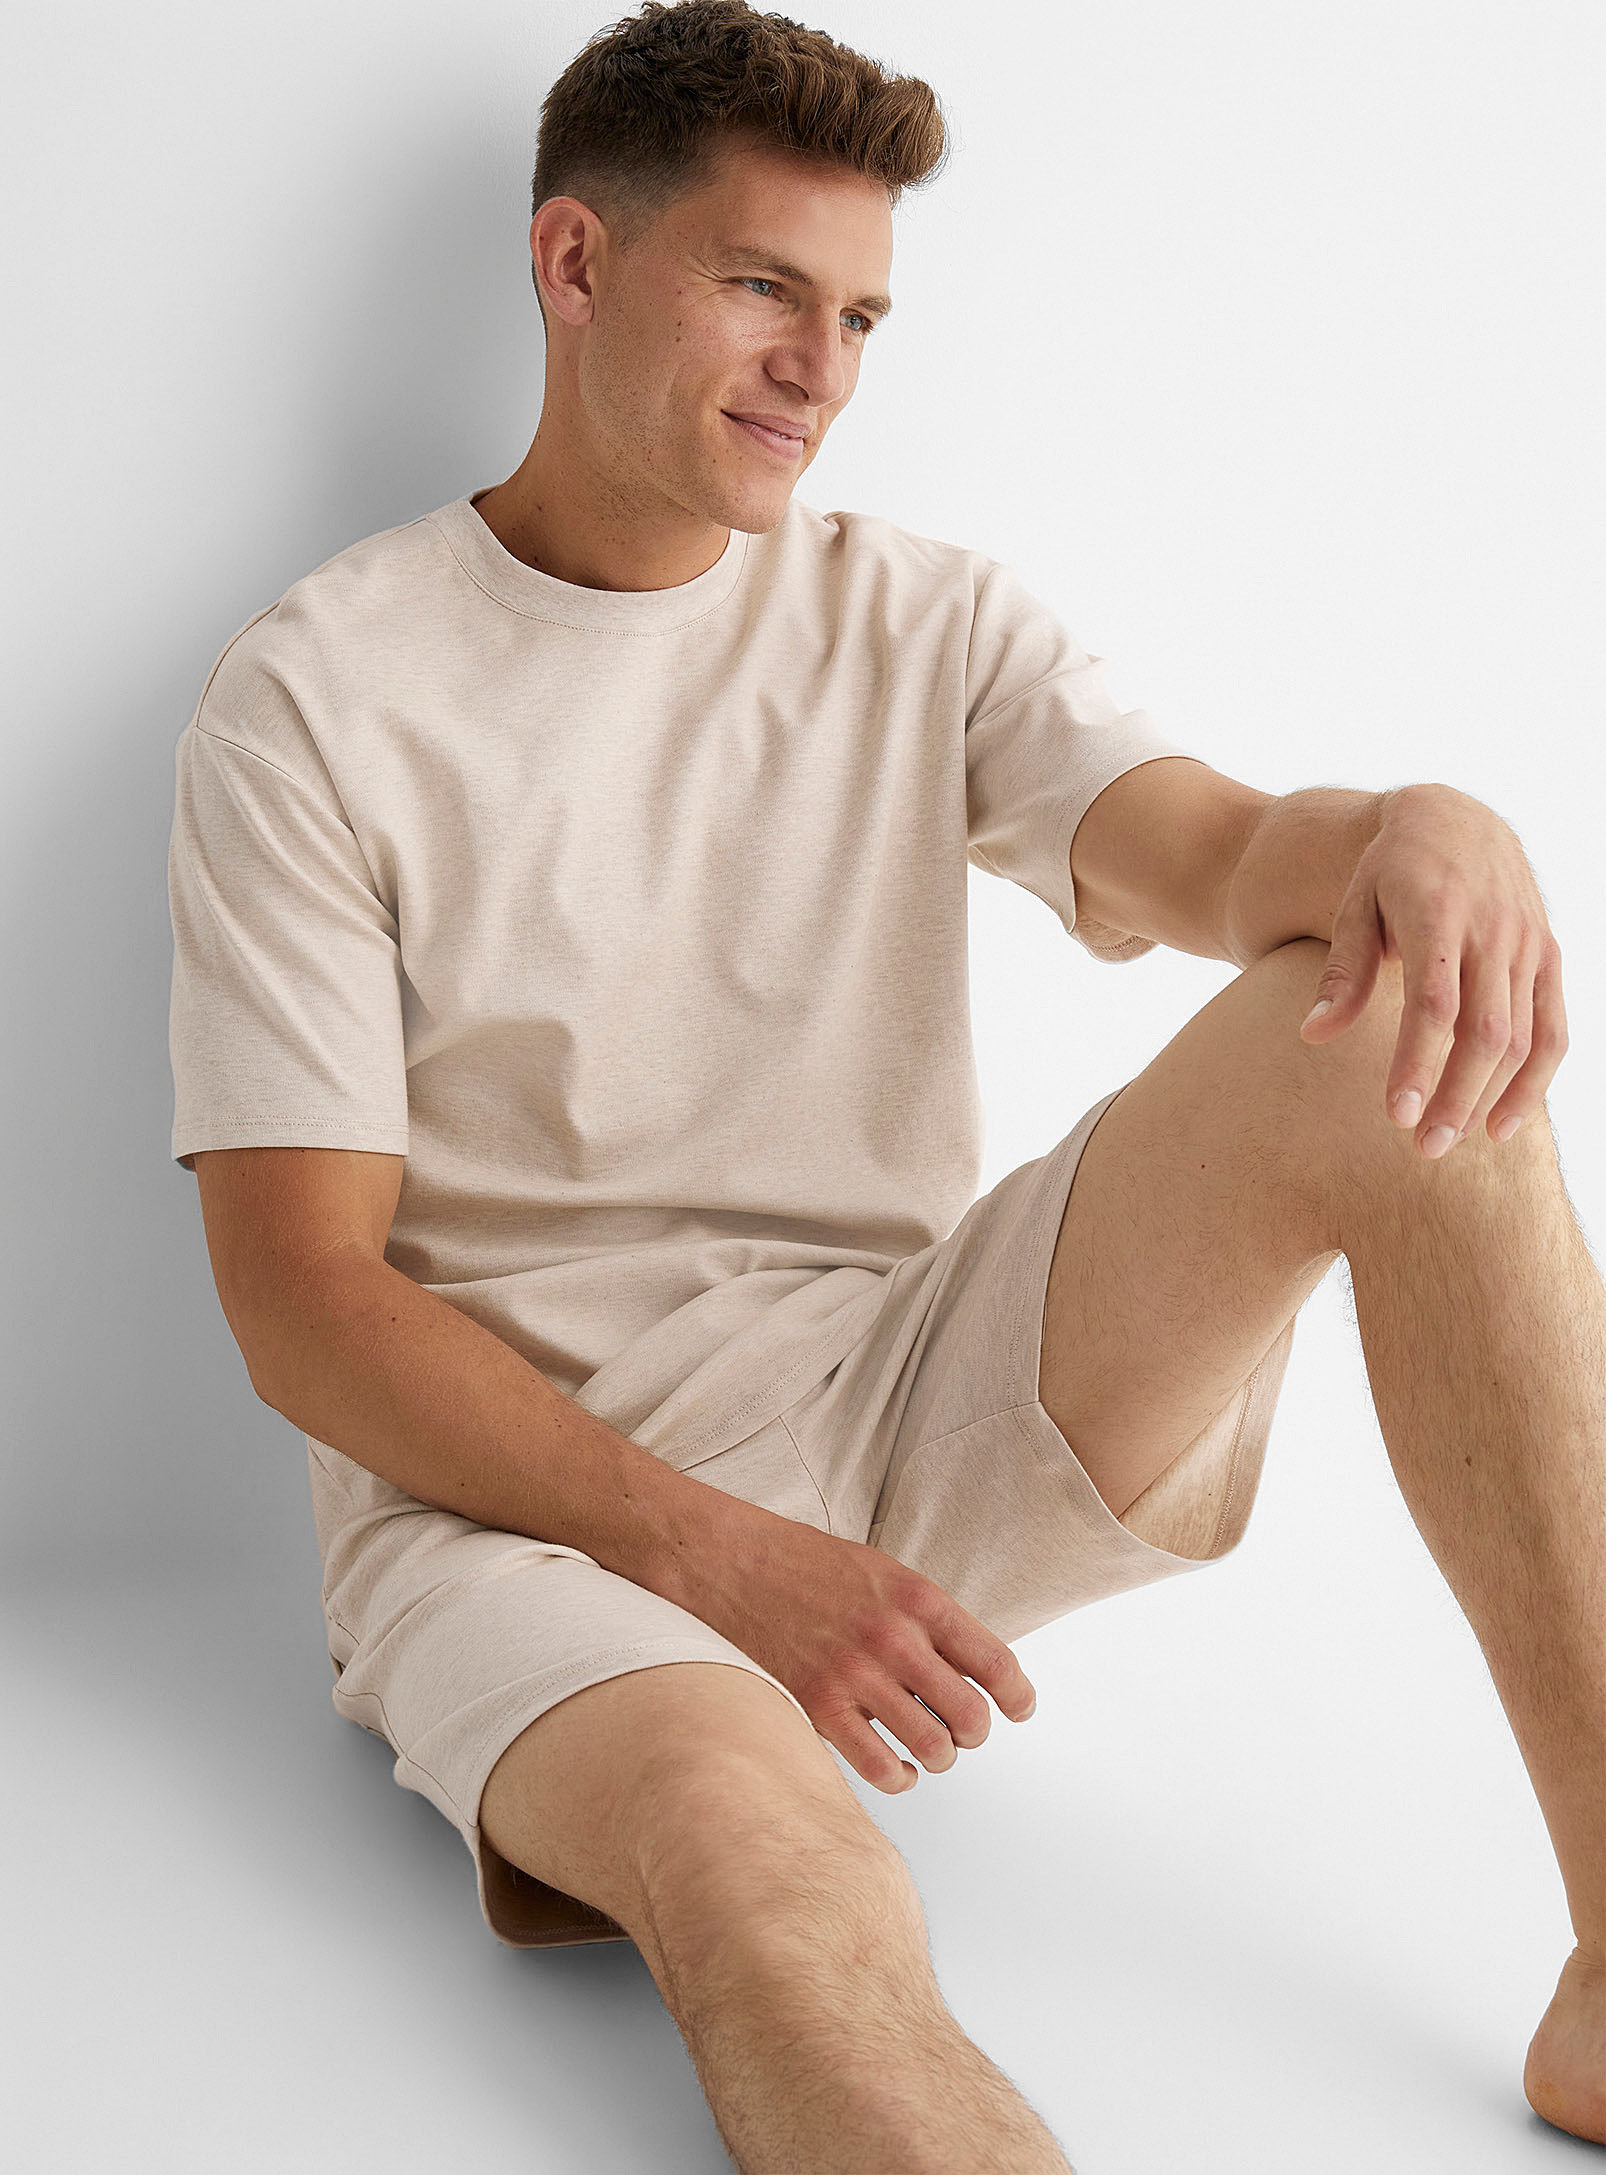 A person wearing a T-shirt and matching Bermuda shorts